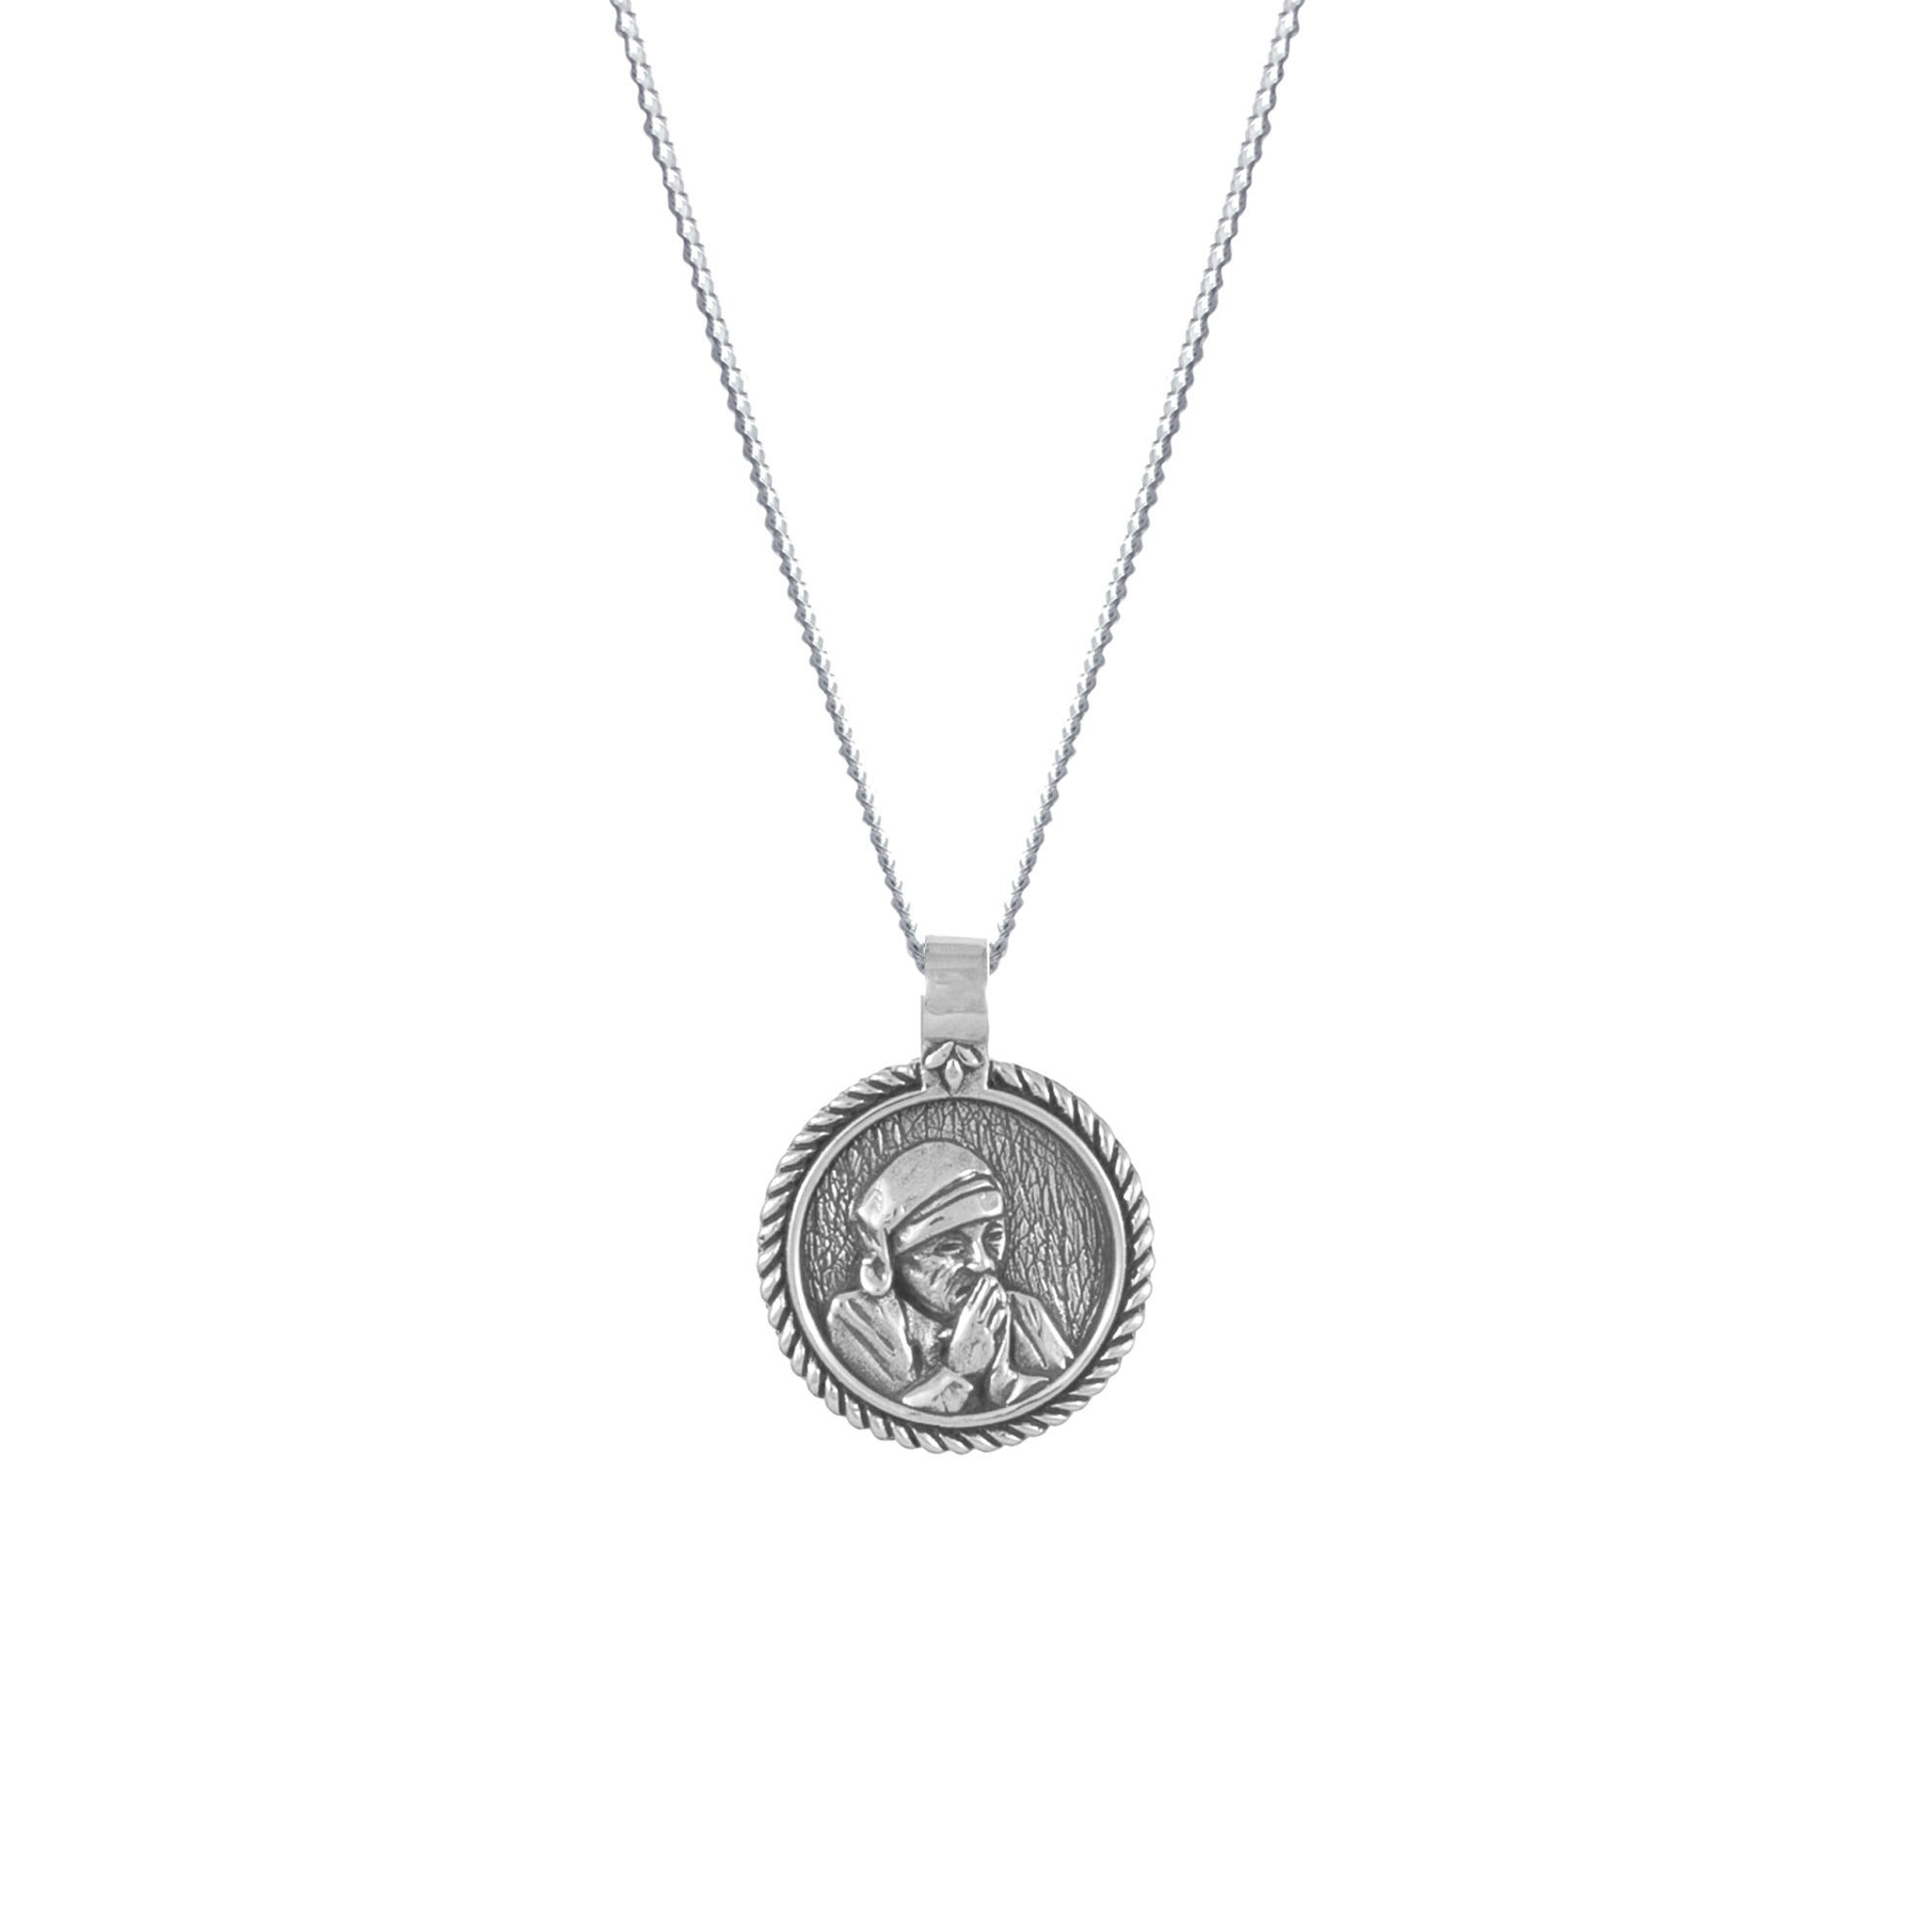 Mother Teresa Pendant for Devotion Necklace - Silver